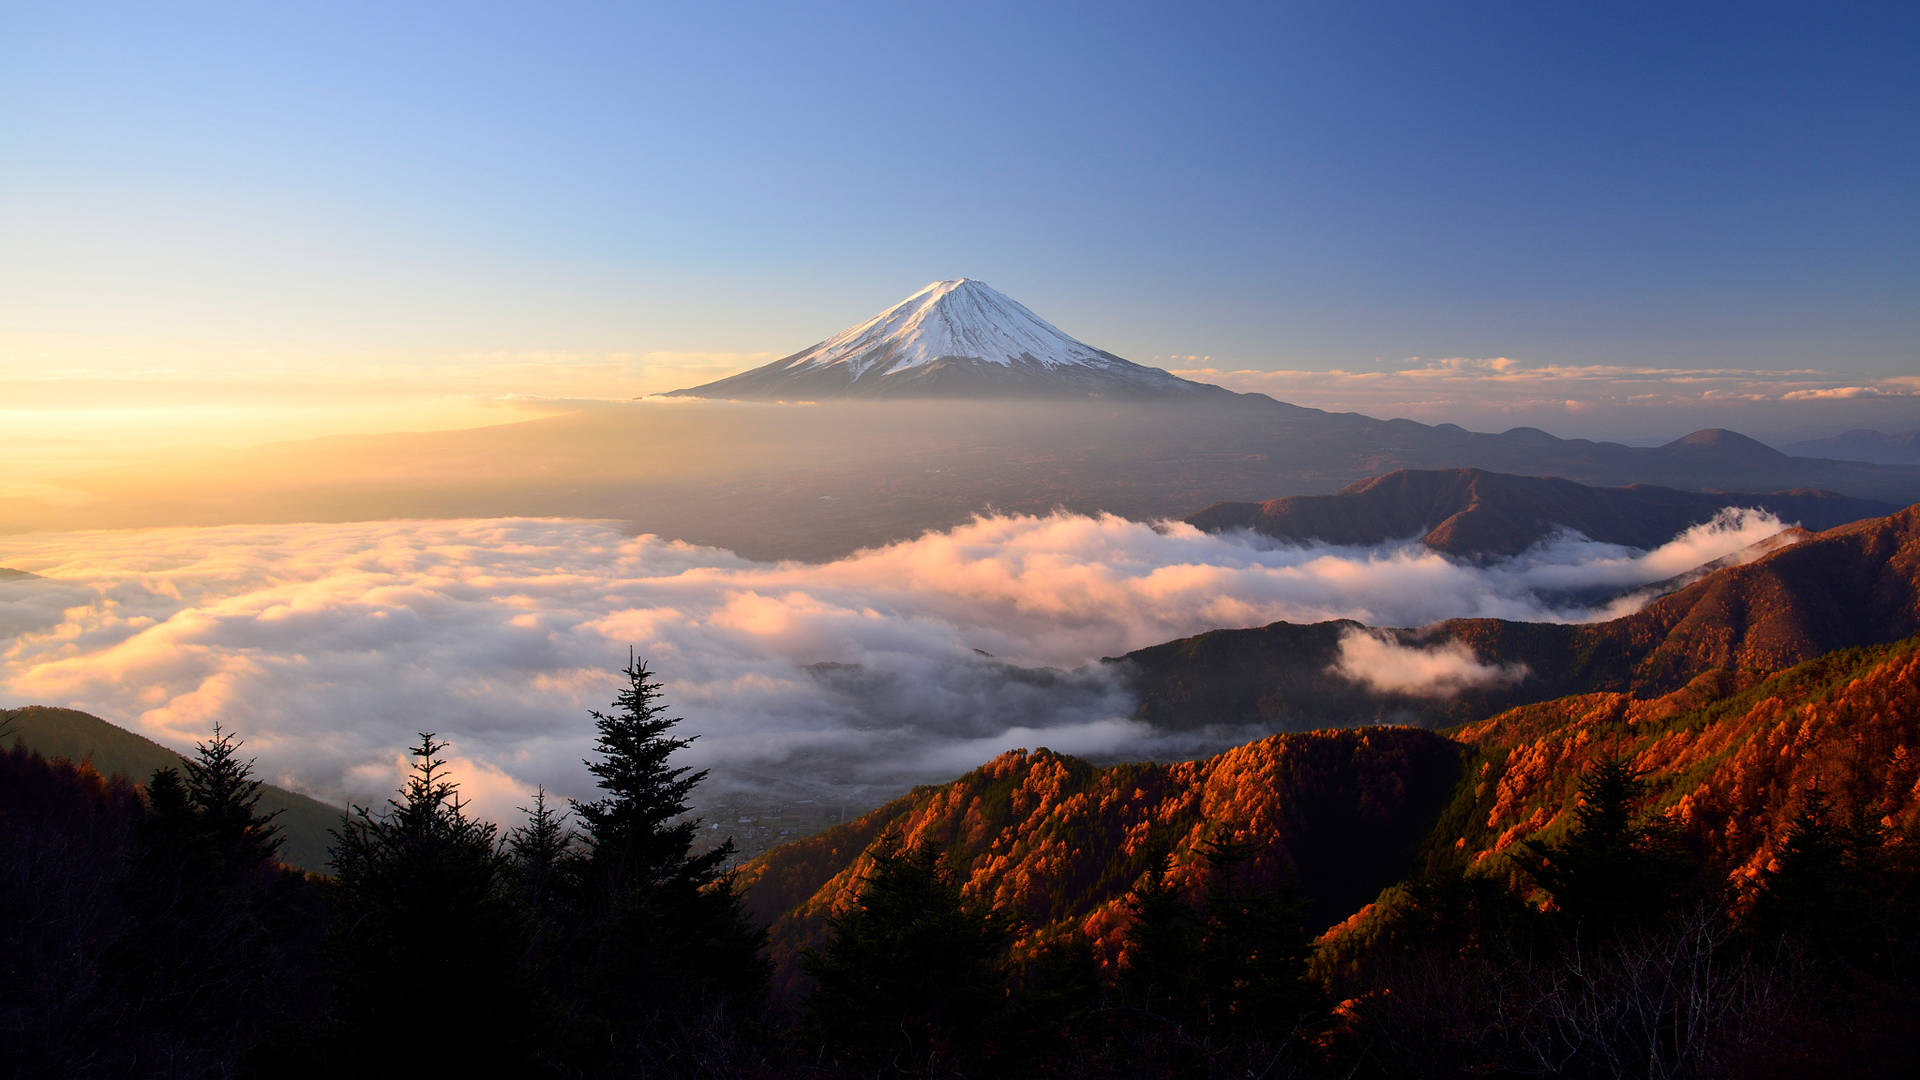 Above The Clouds Mount Fuji